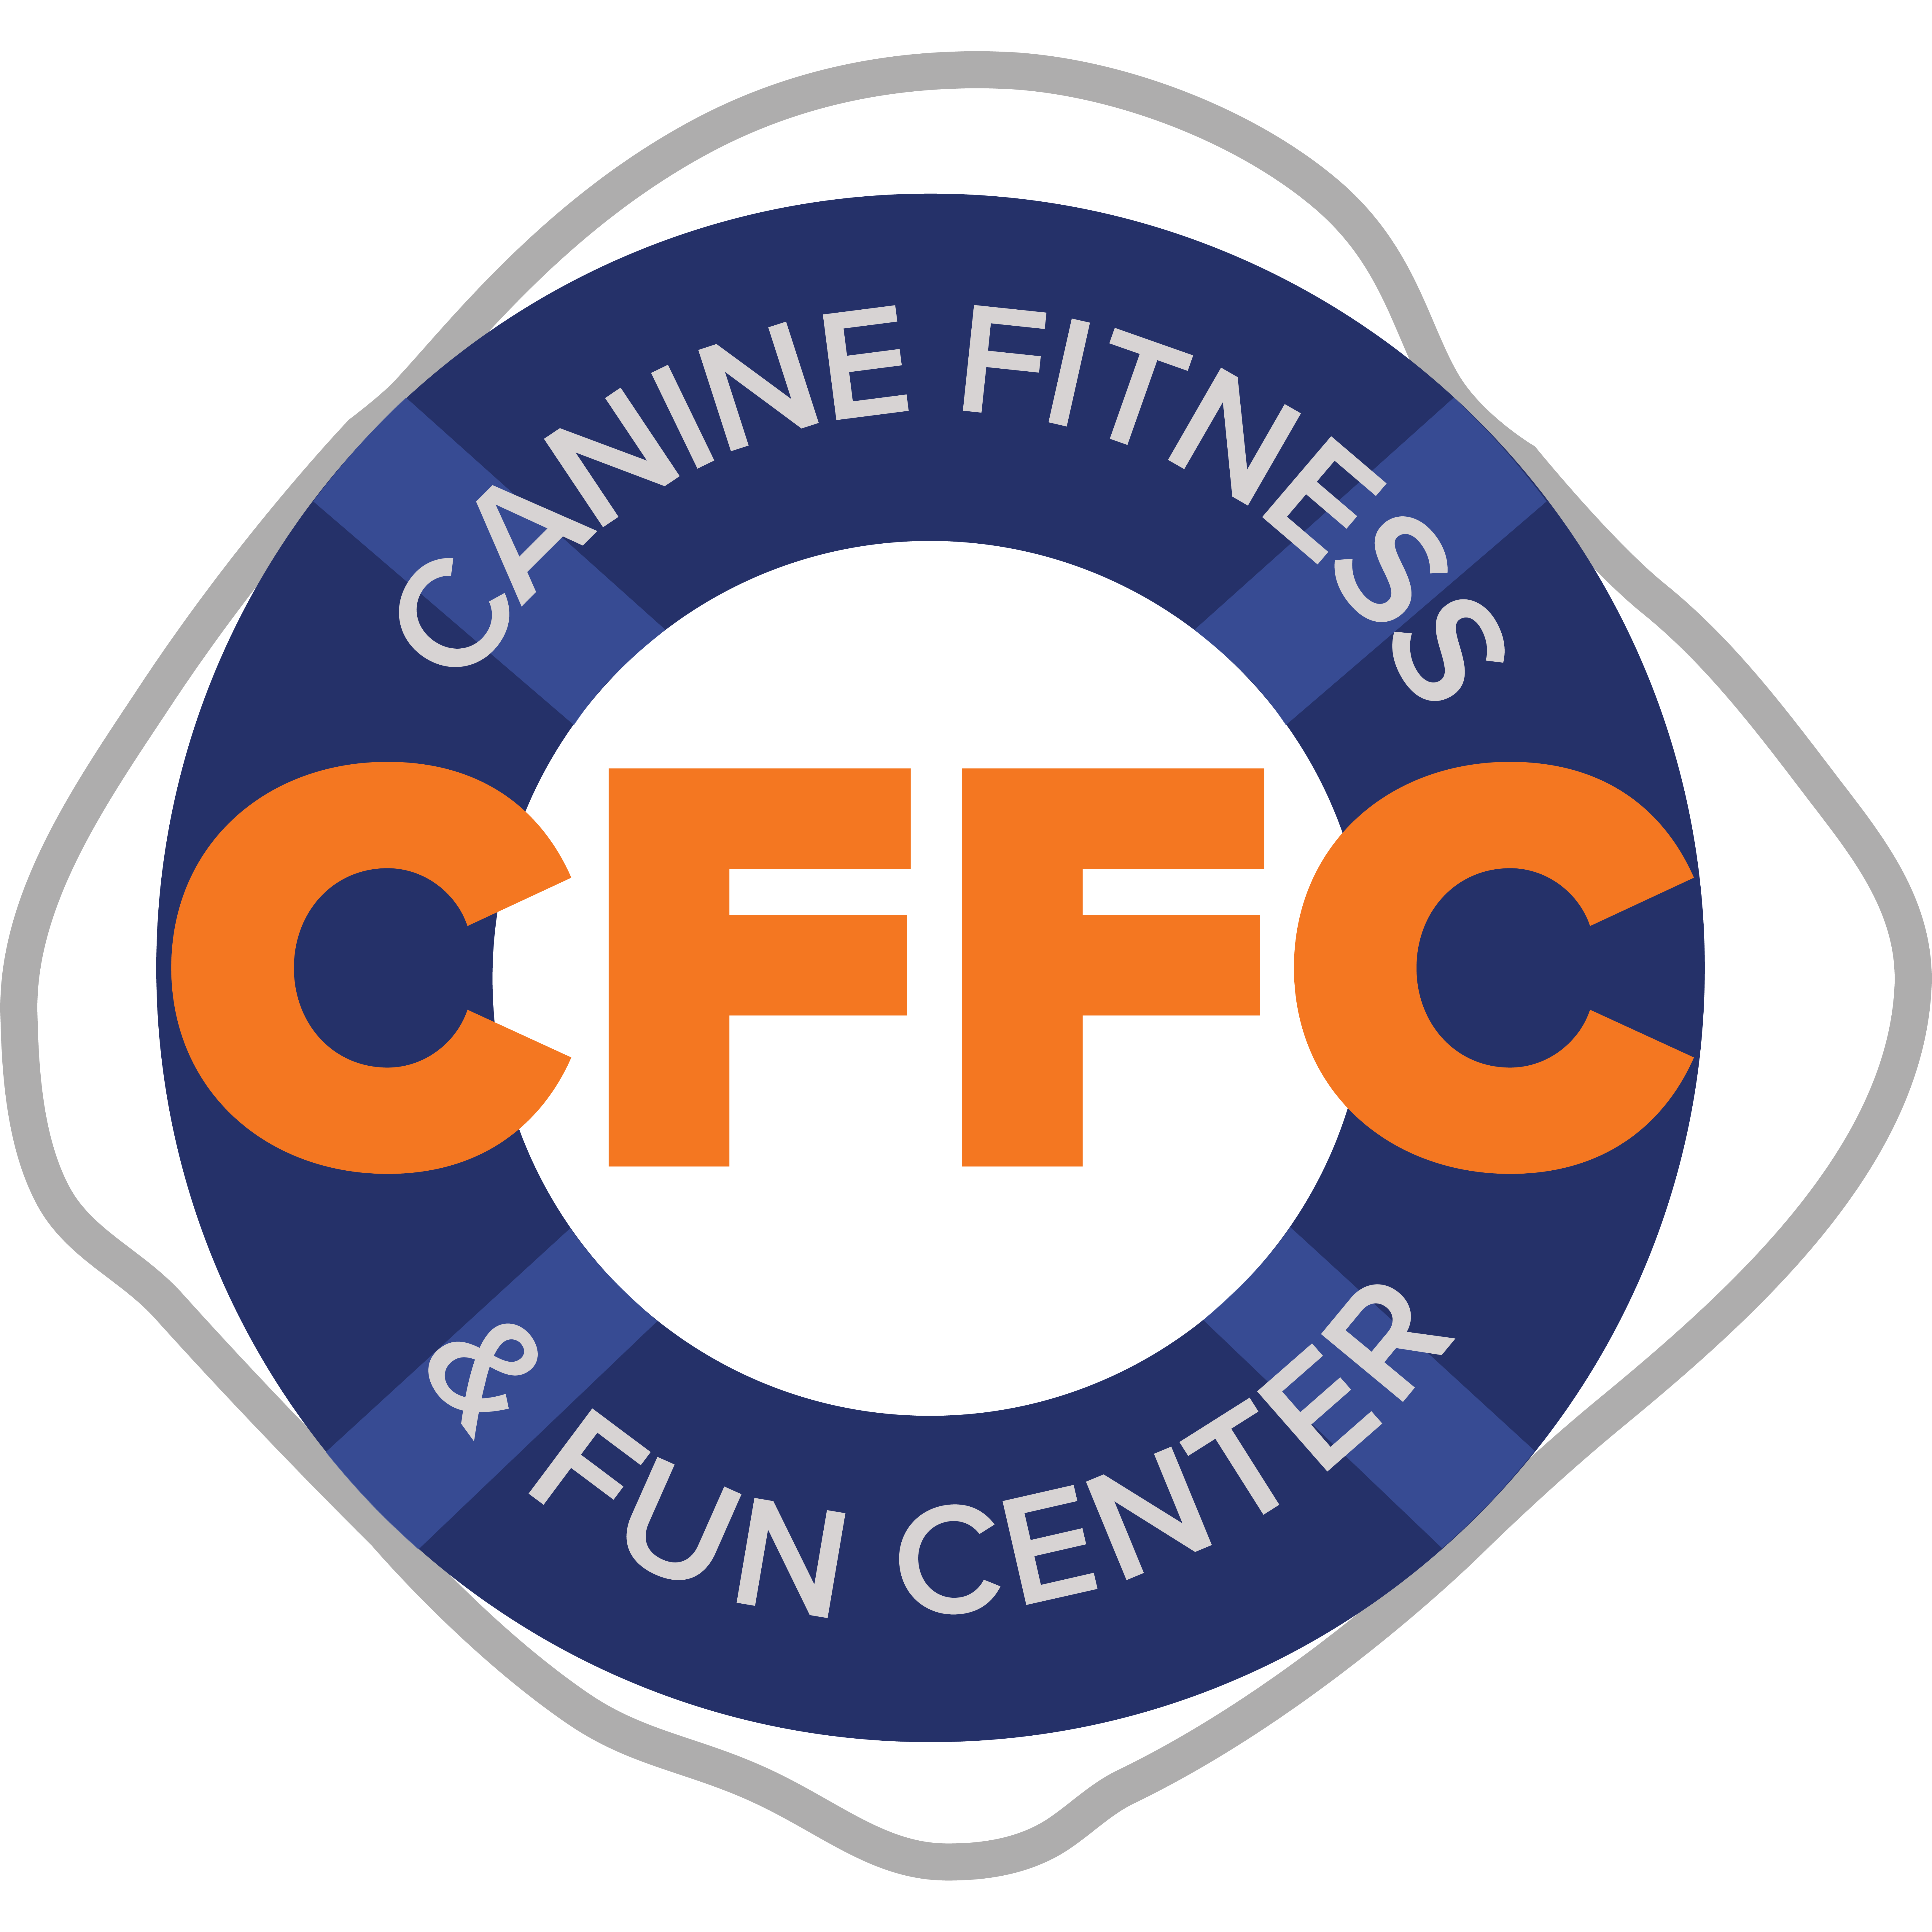 Canine Fitness & Fun Center